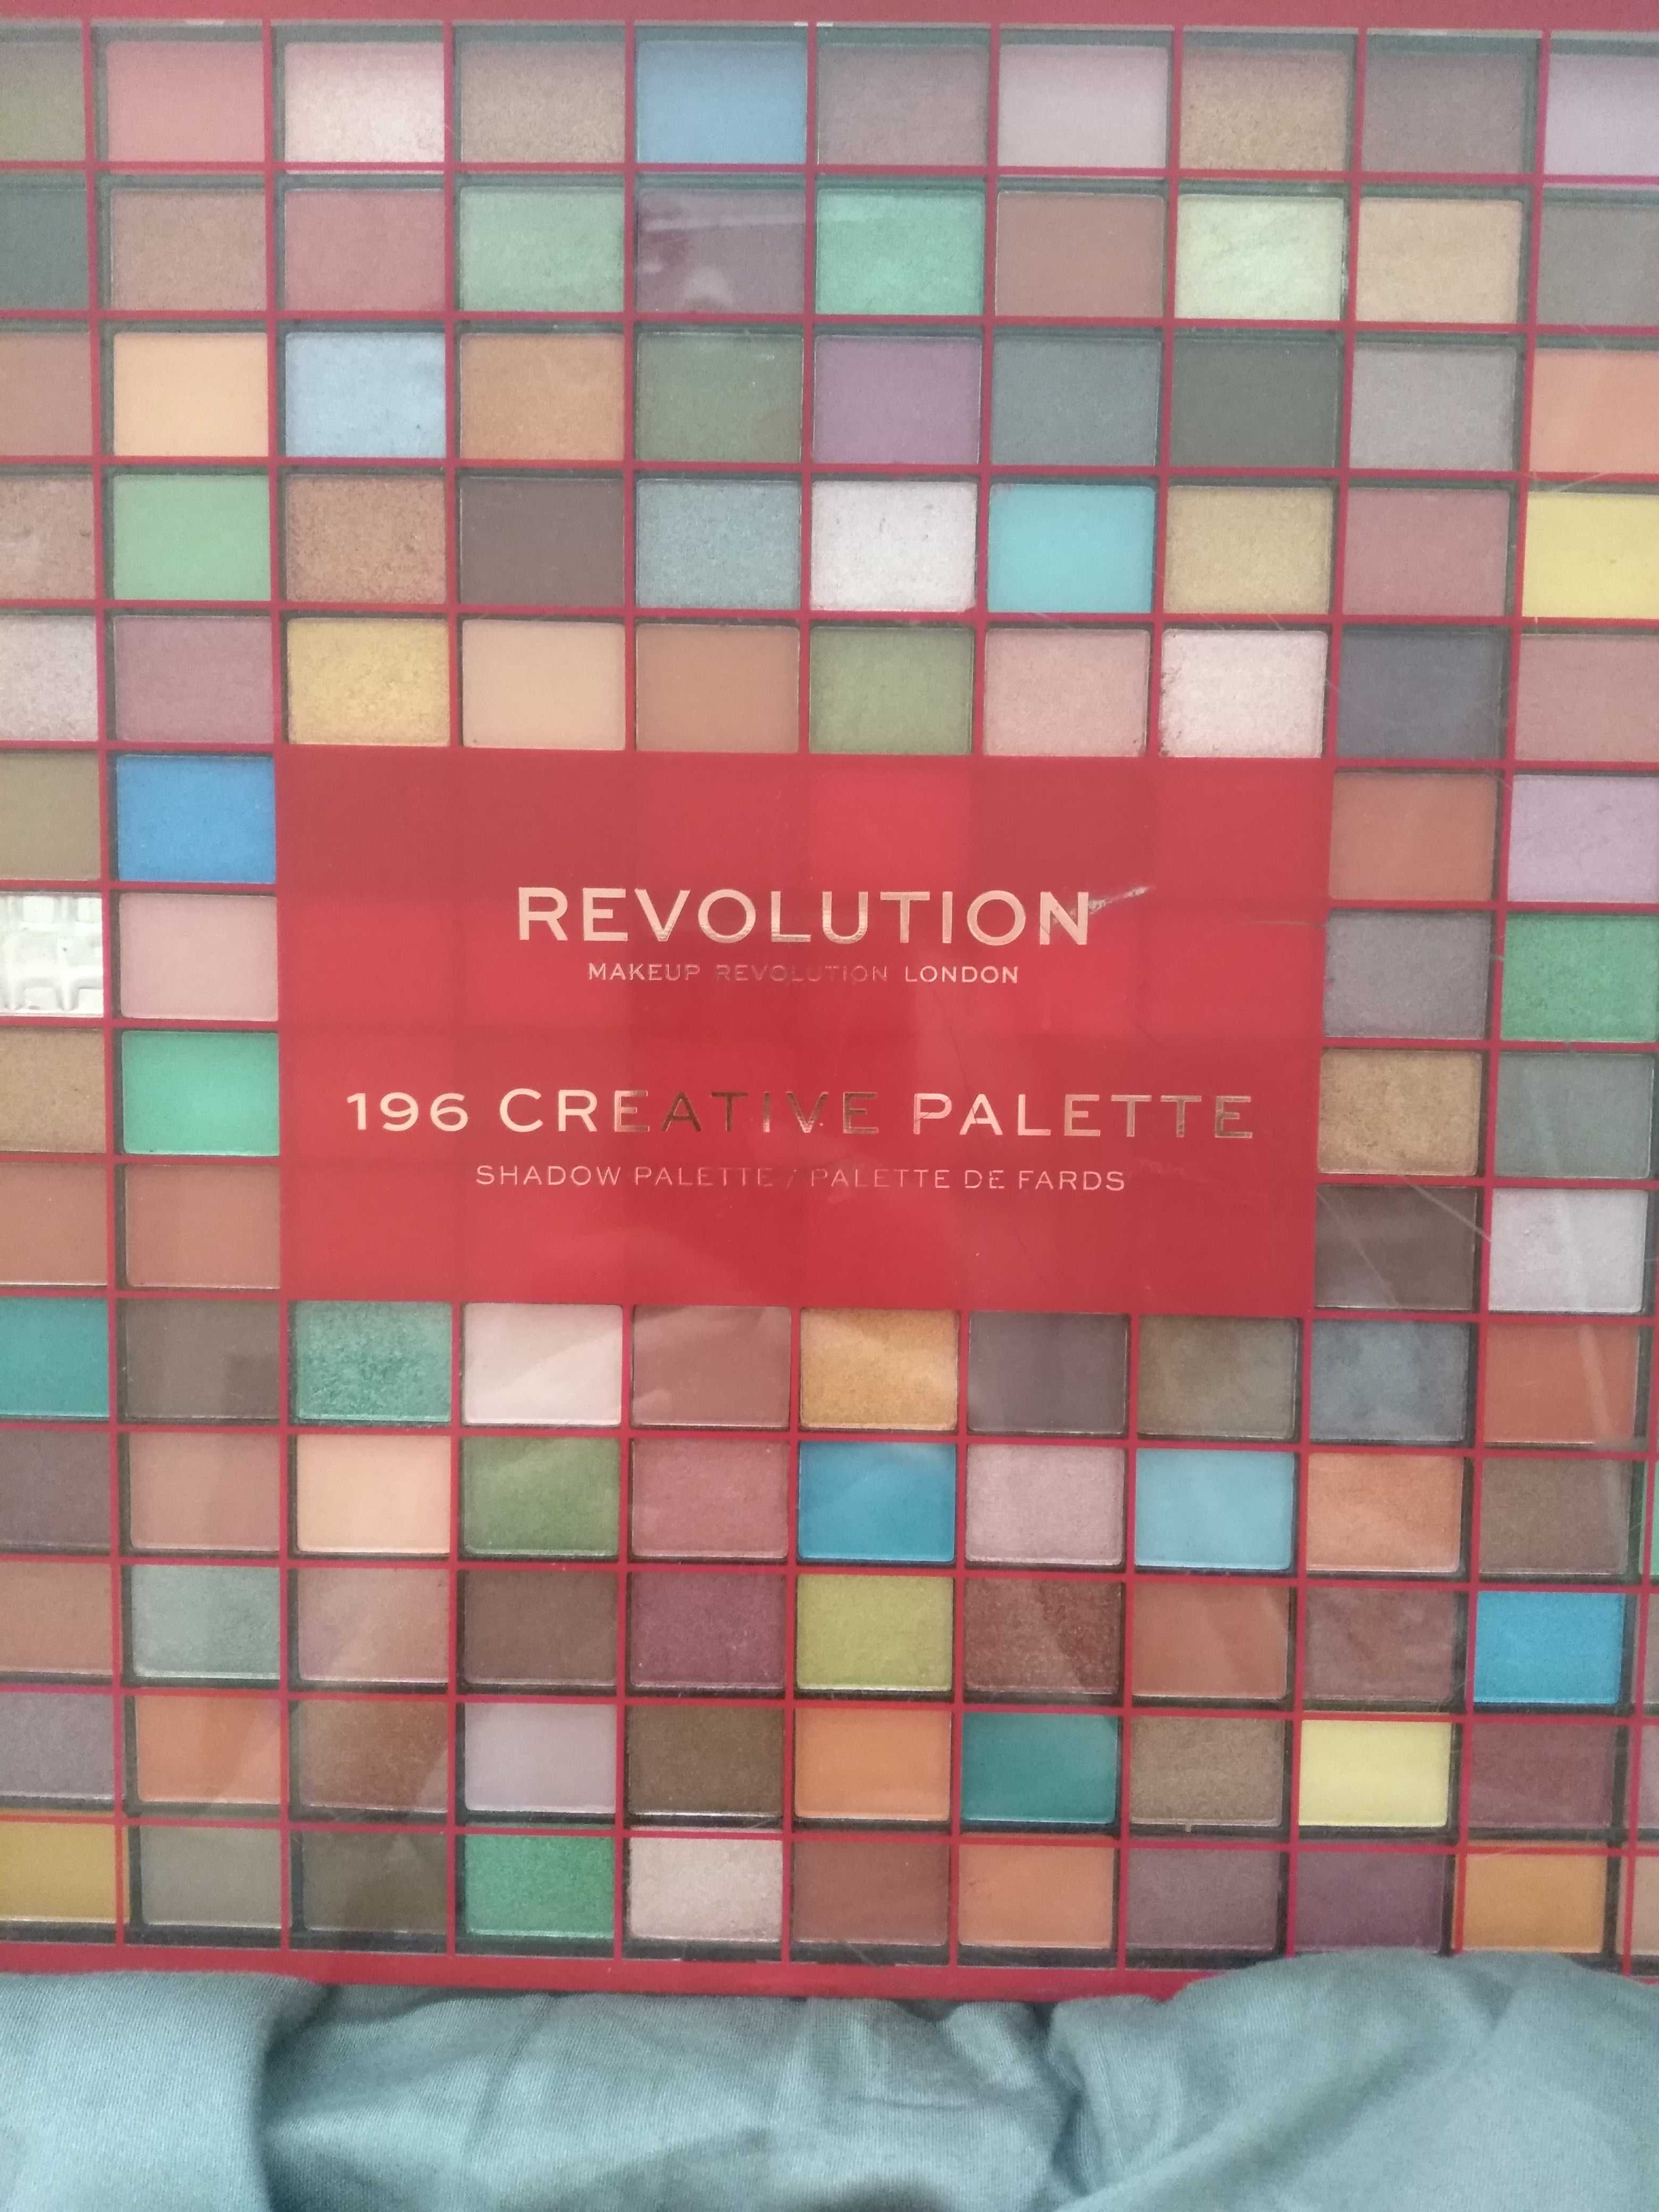 Revolution 196 Creative Palette duża paleta cieni 196 kolorów